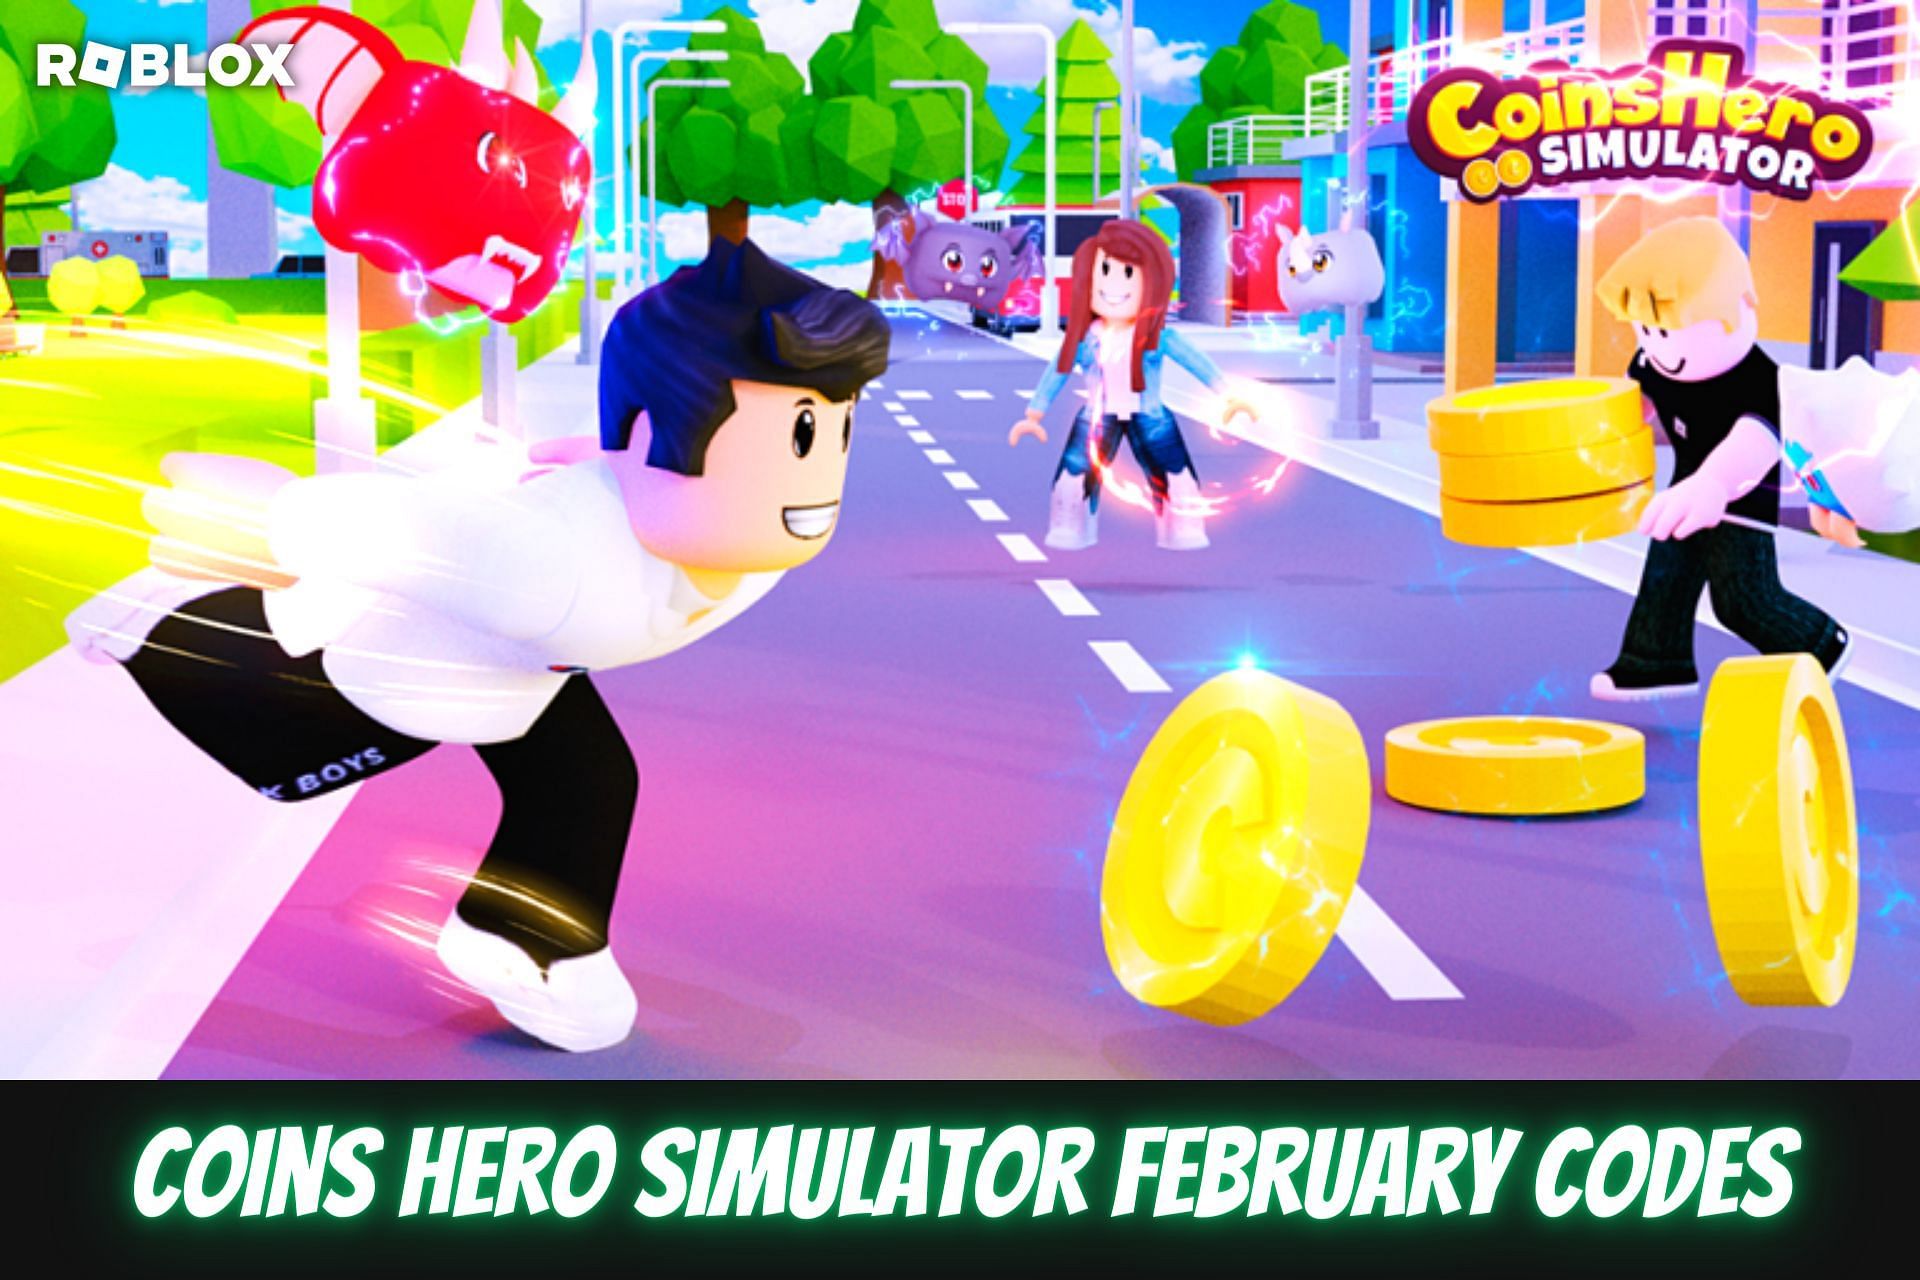 Coins Hero Simulator February codes